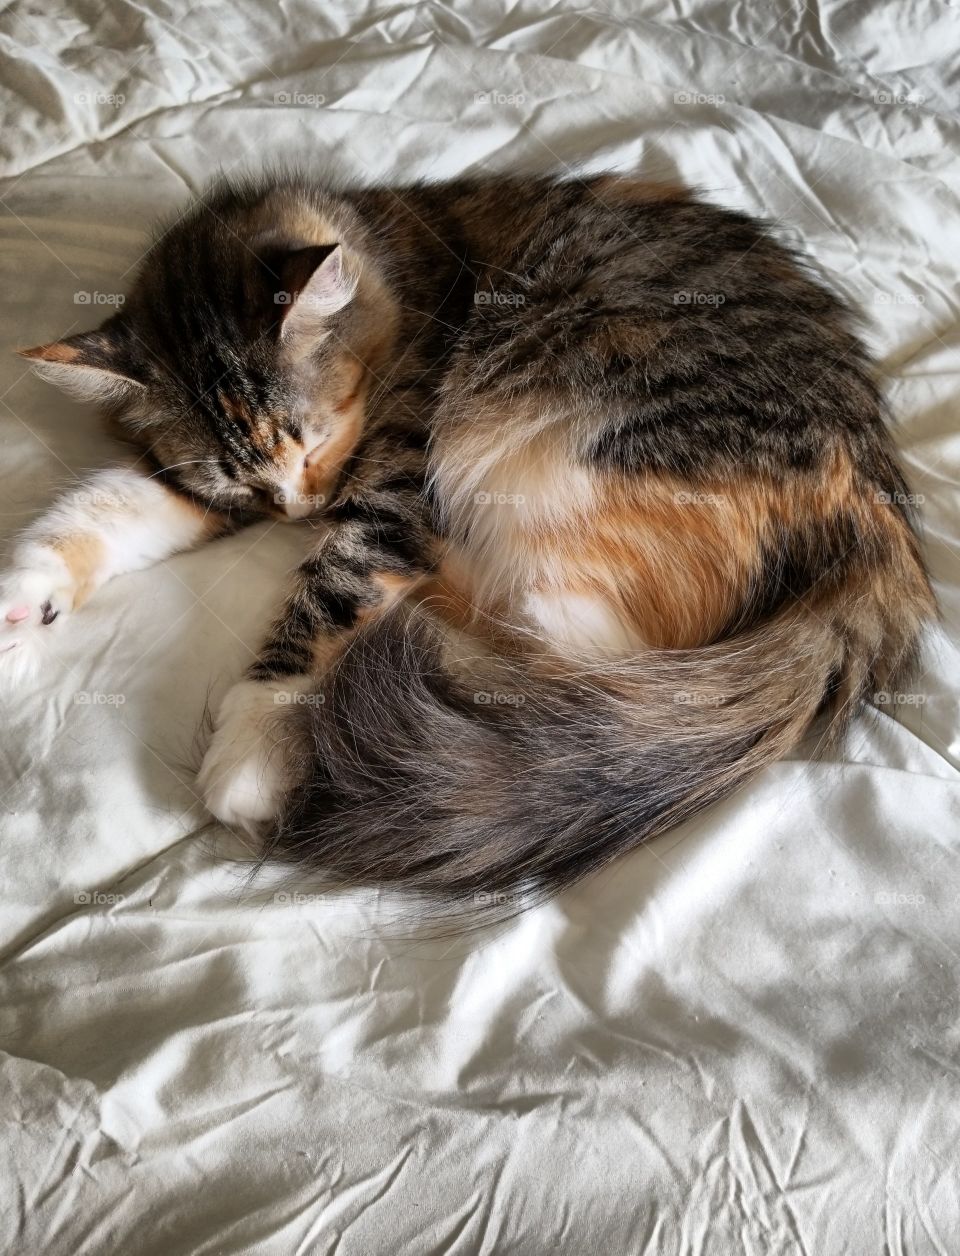 Sleeping Calico cat